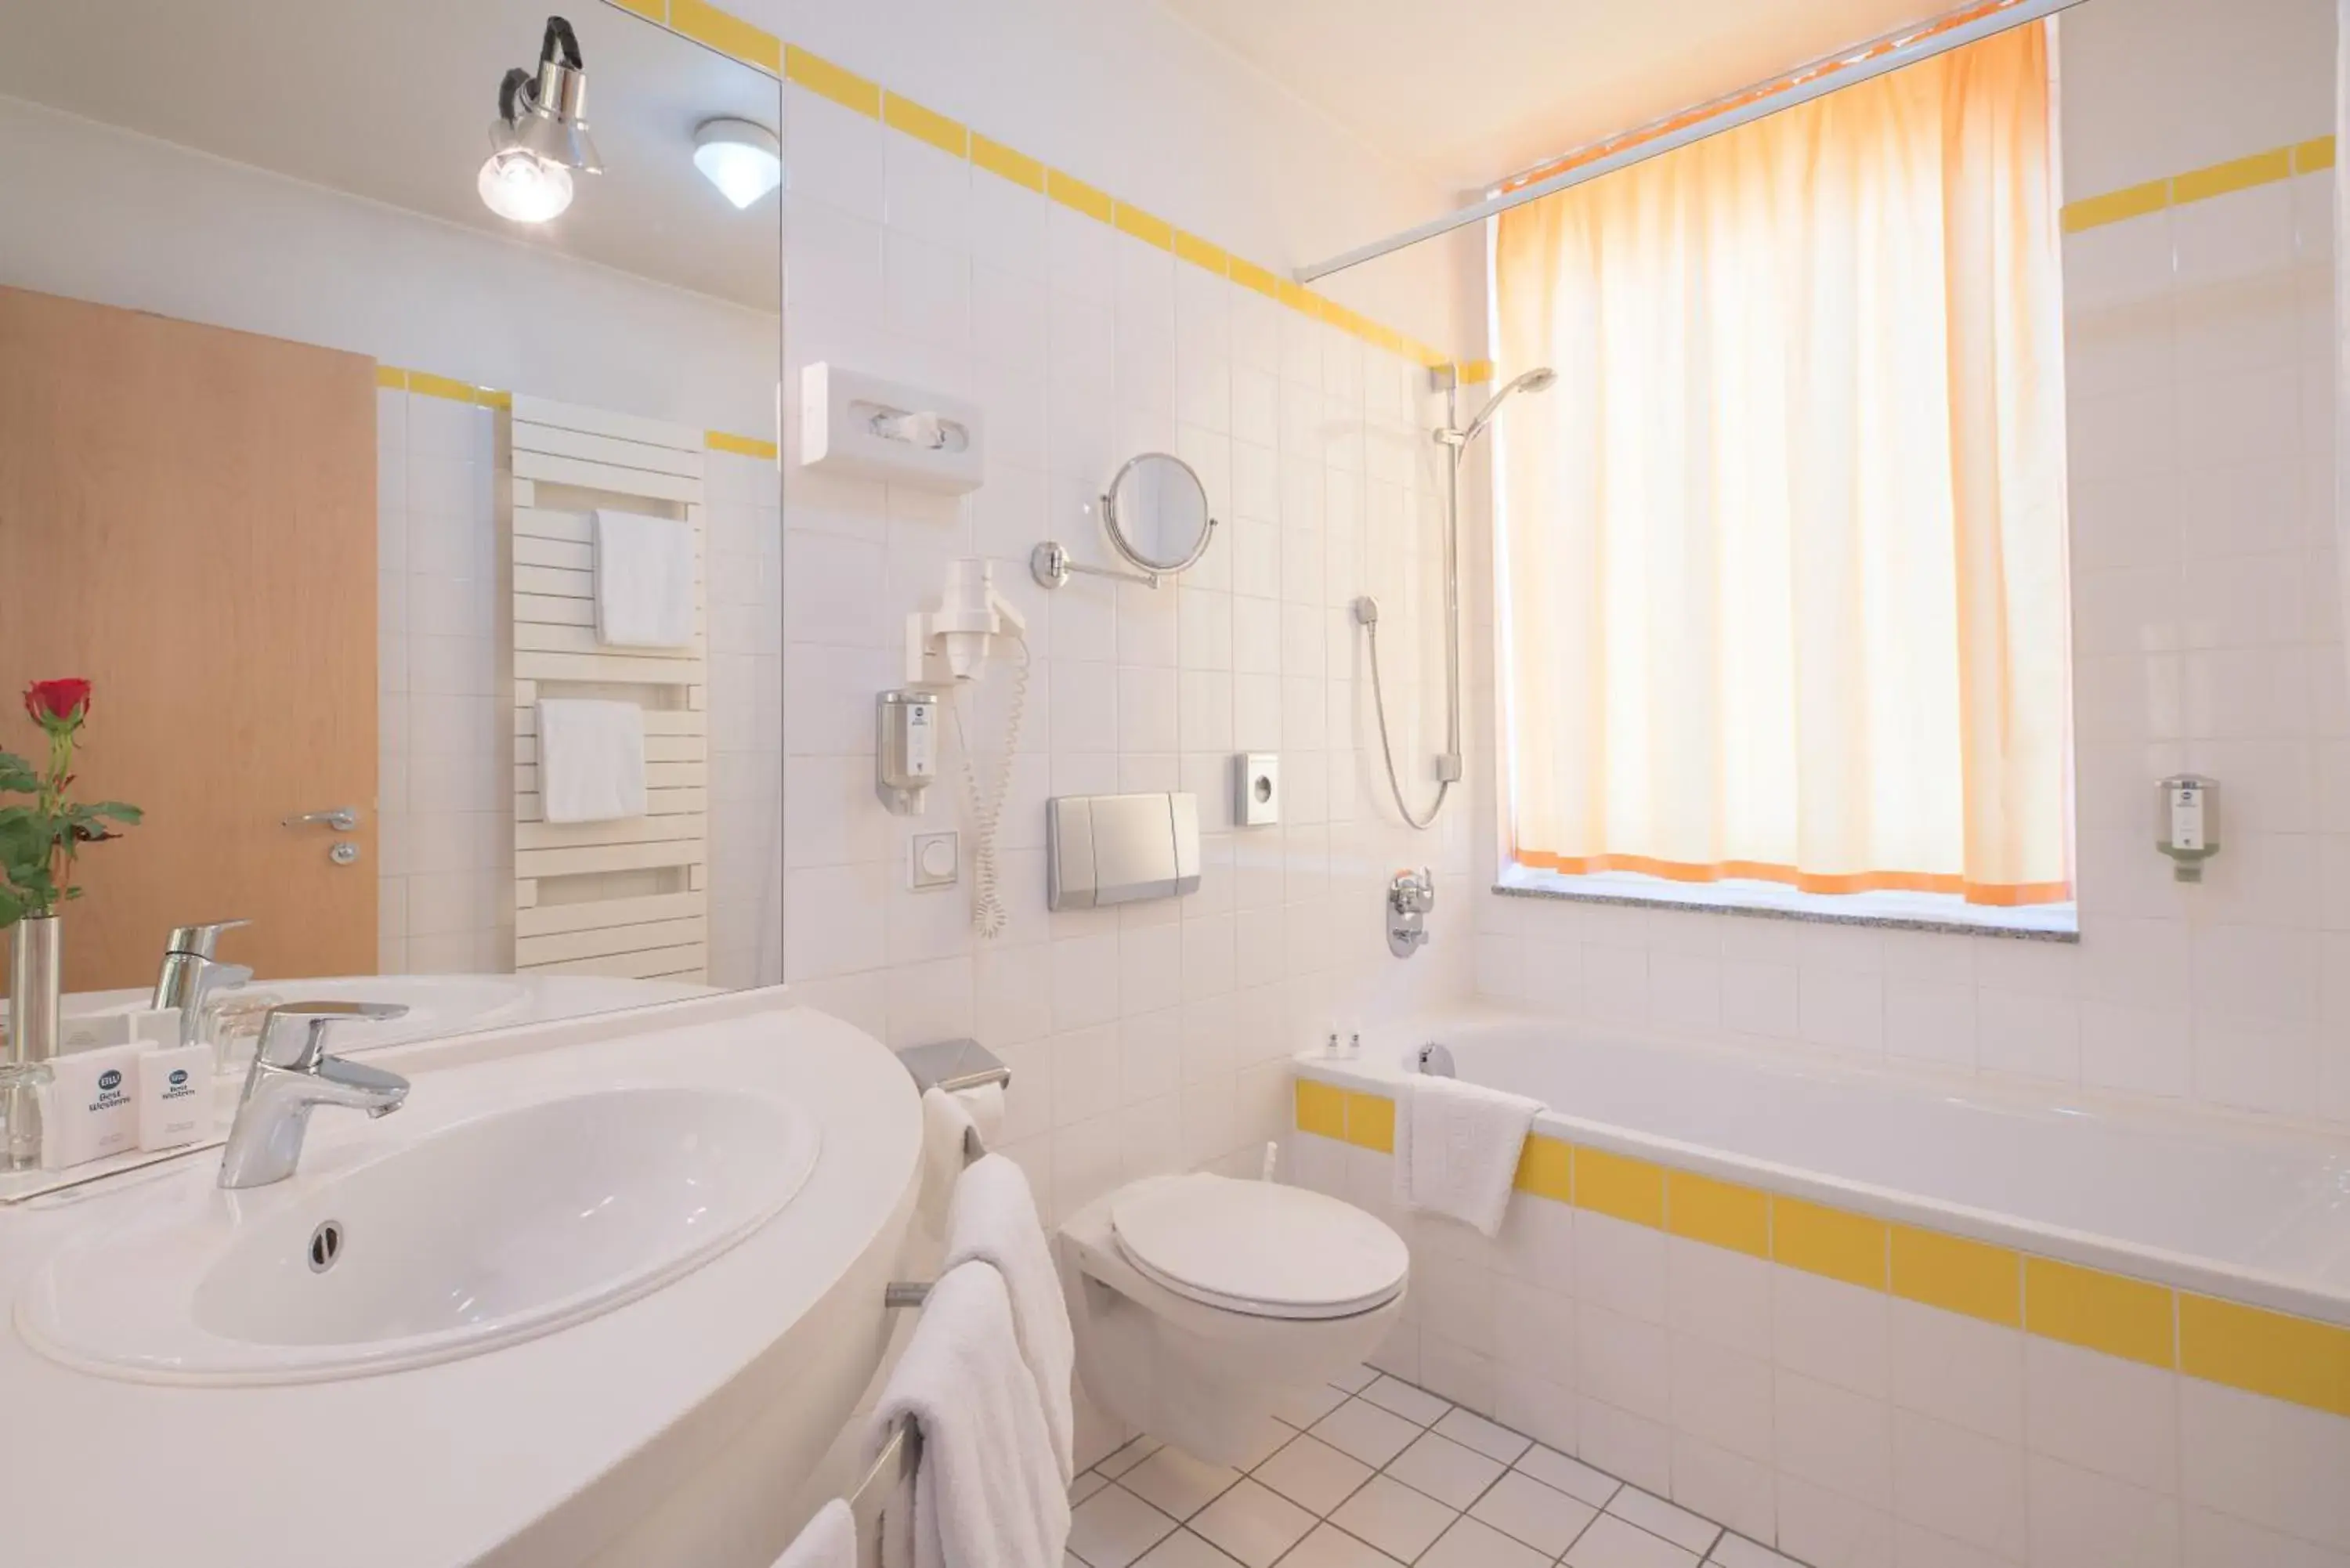 Photo of the whole room, Bathroom in Best Western Hotel im Forum Mulheim